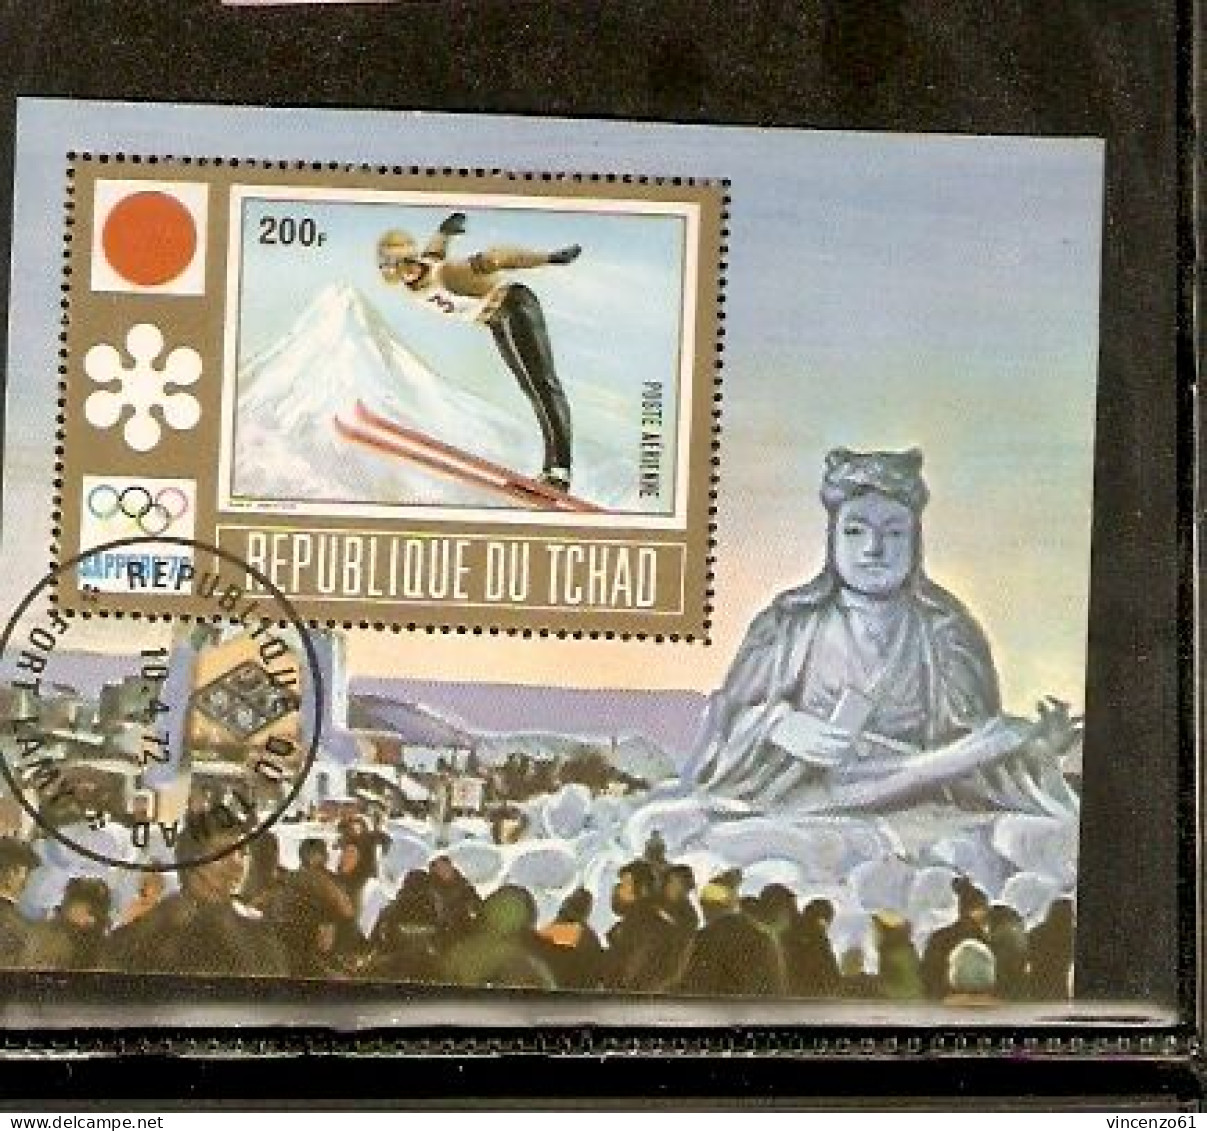 REPUBLIQUE DU TCHAD SKI JUMP SAPPORO 72 OLIMPIC GAME - Jet Ski